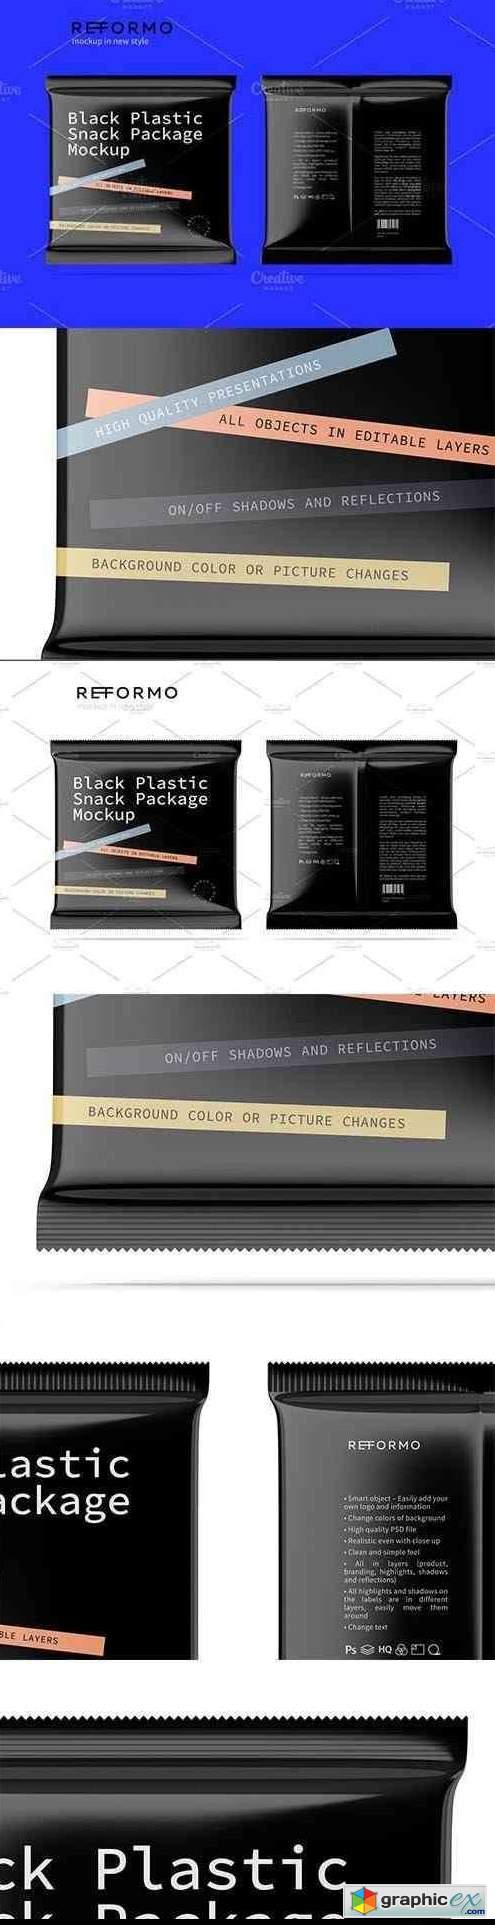 Black Plastic Snack Package Mockup